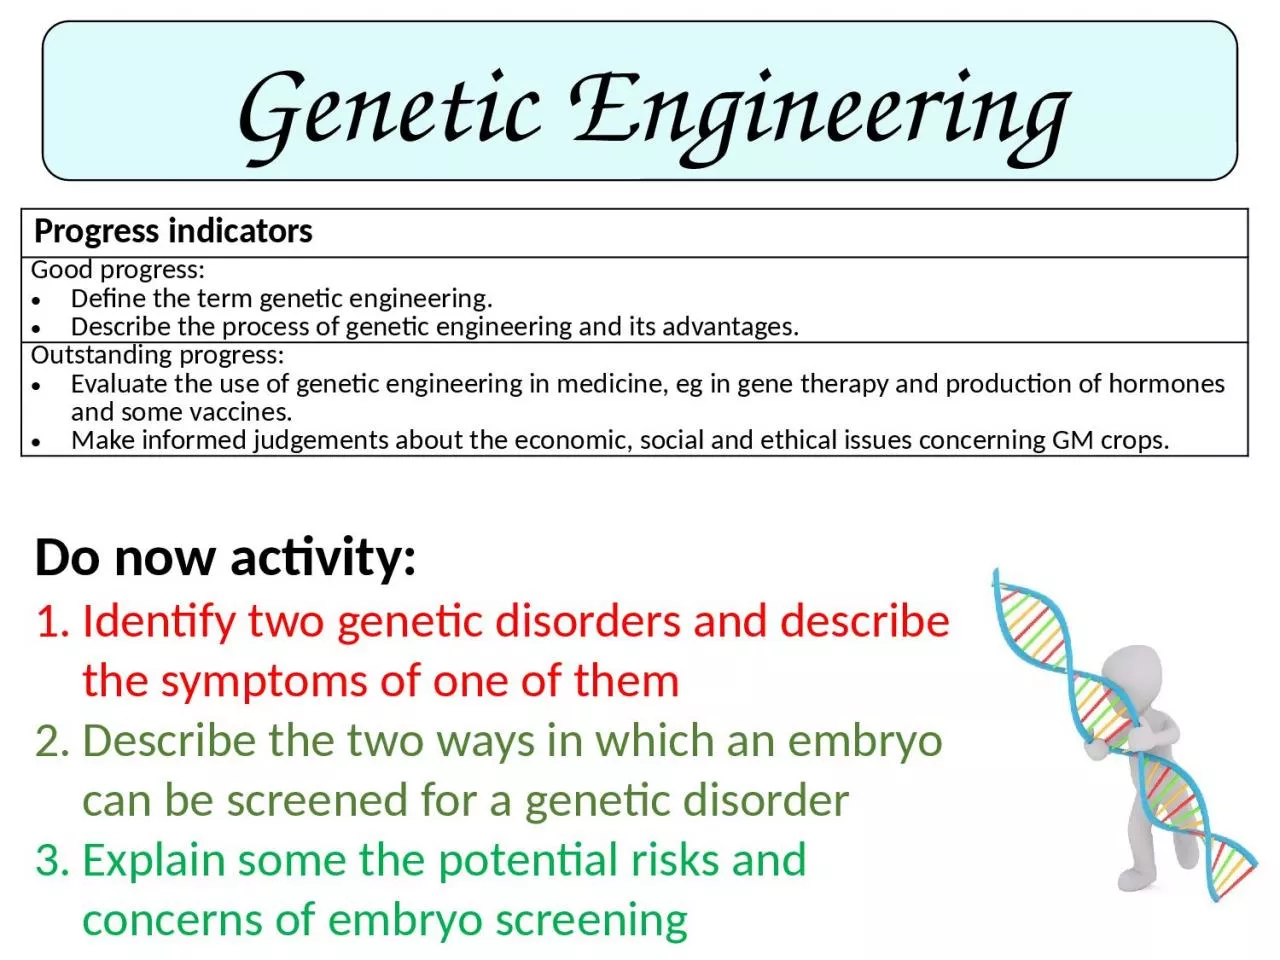 Genetic Engineering Progress indicators